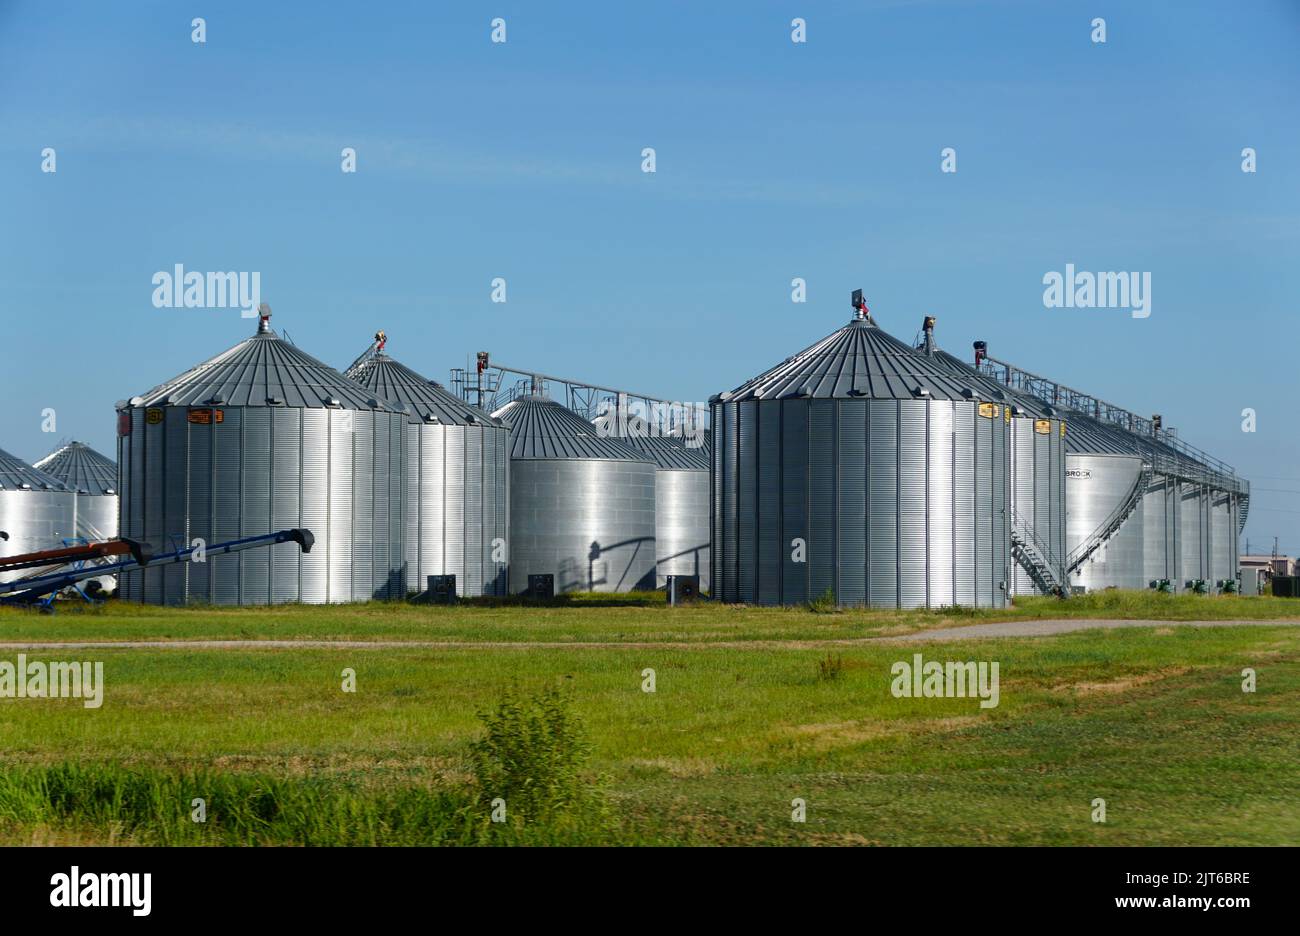 Arkansas, U.S.A - June 24, 2022 - Large grain silo near the wheat farm Stock Photo